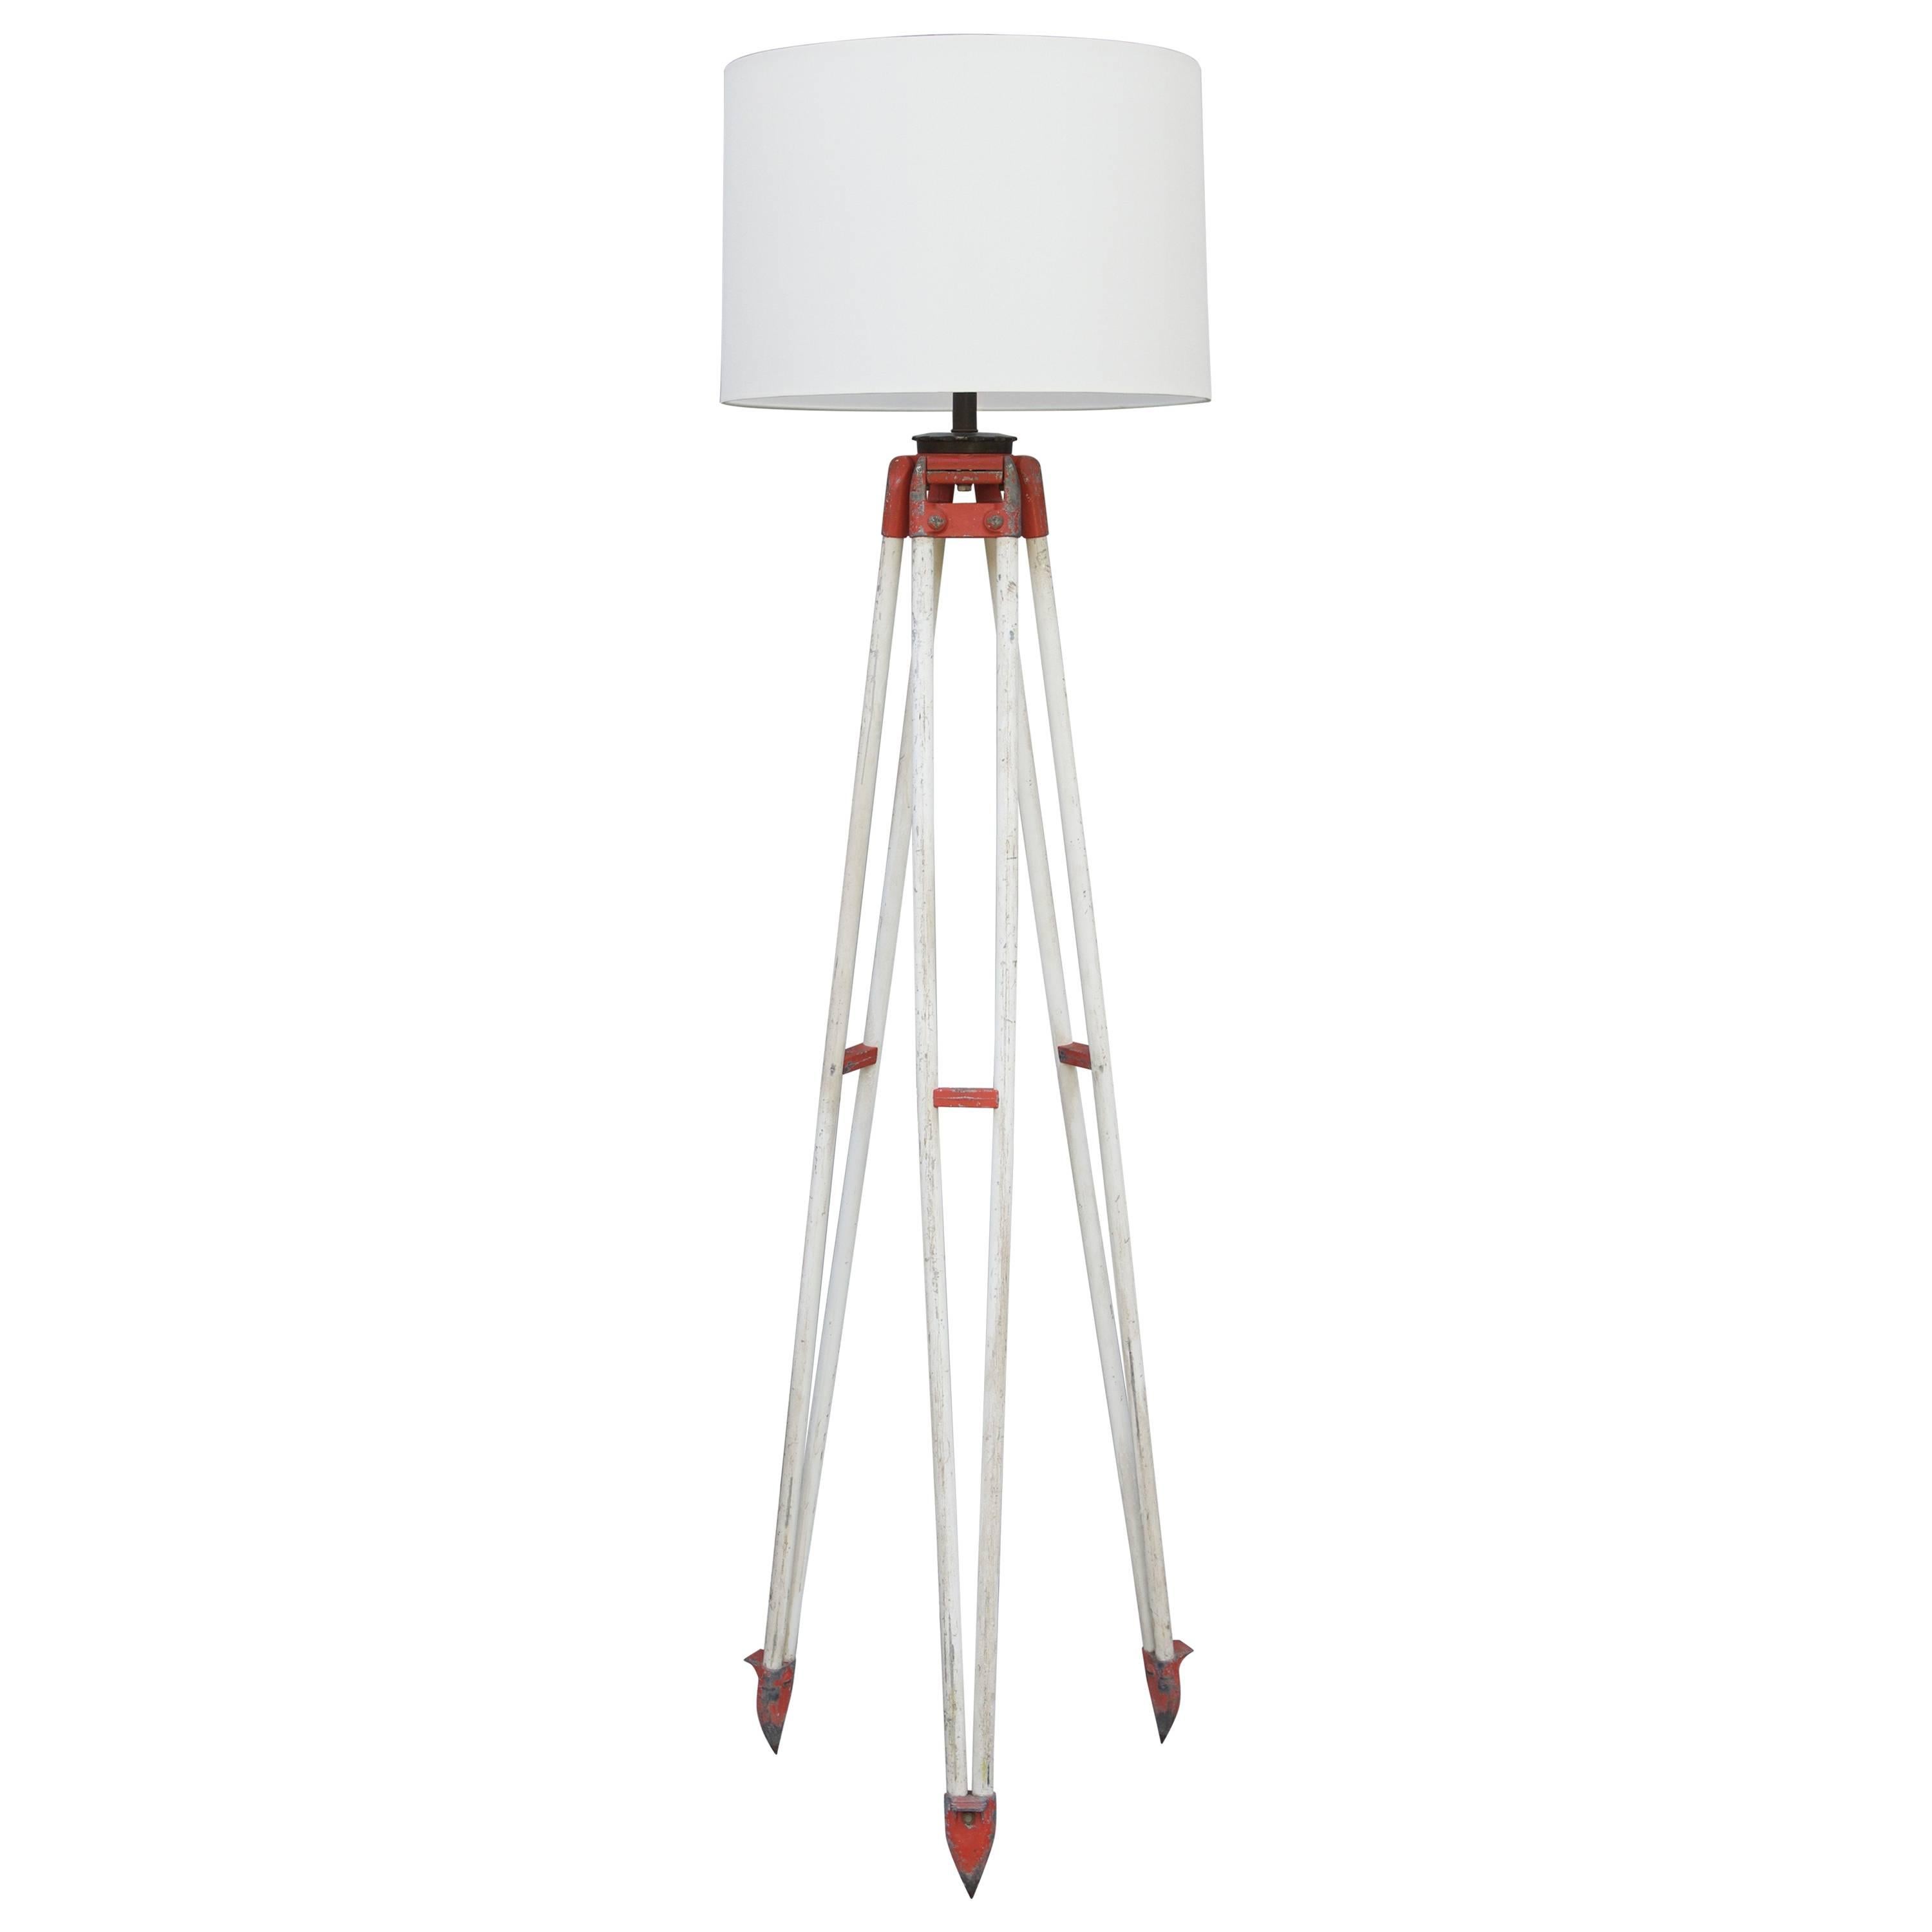 Tall Industrial Surveyor Tripod Floor Lamp For Sale